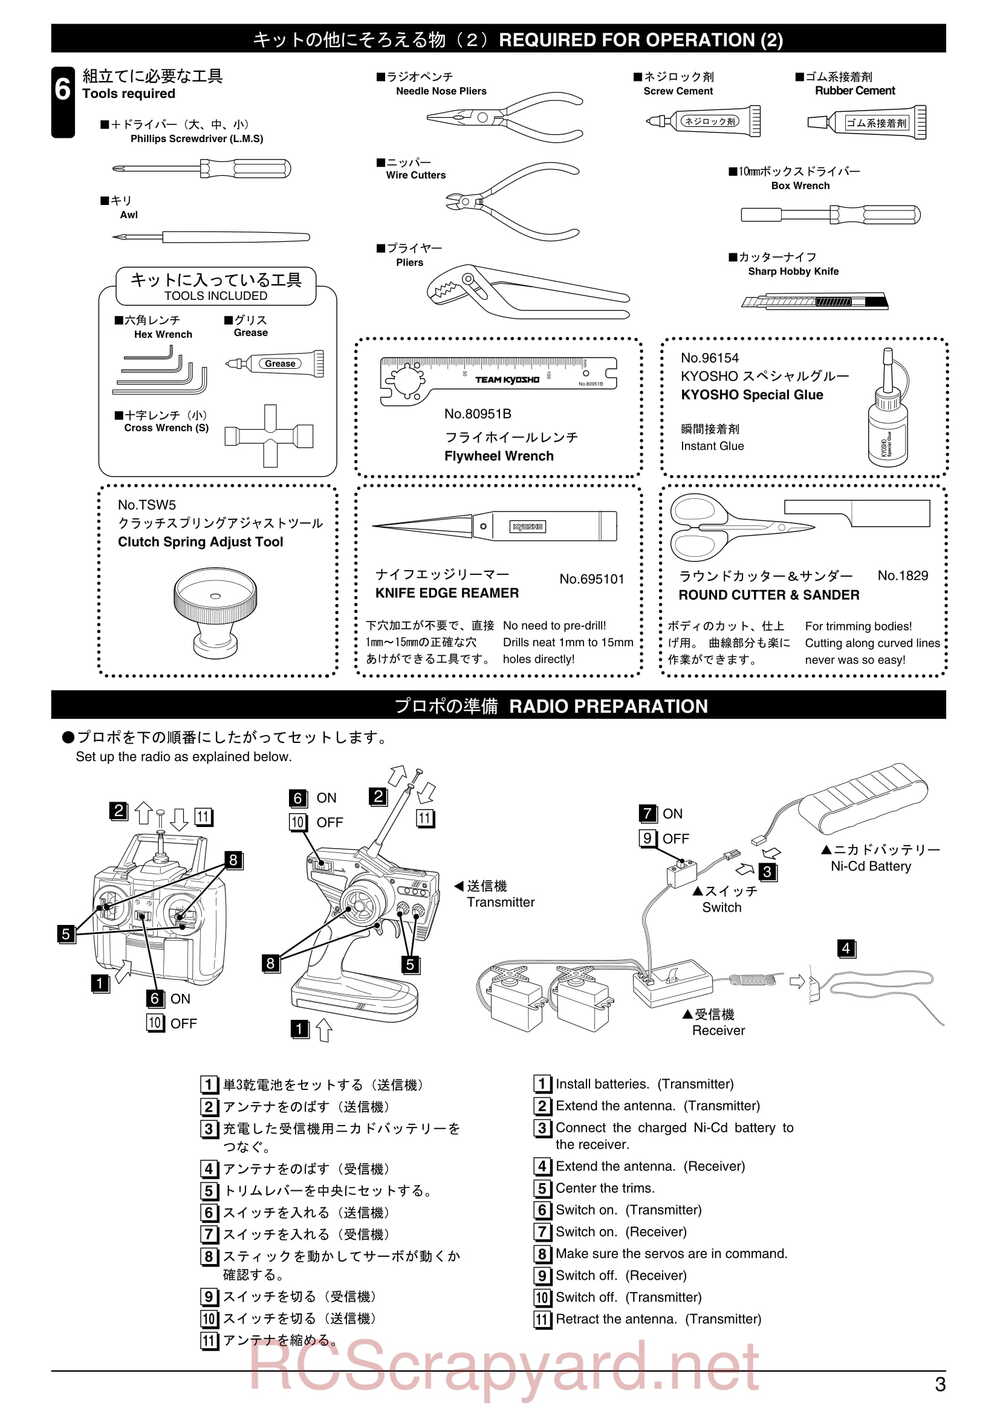 Kyosho - 31256 - V-One RRR - Manual - Page 03